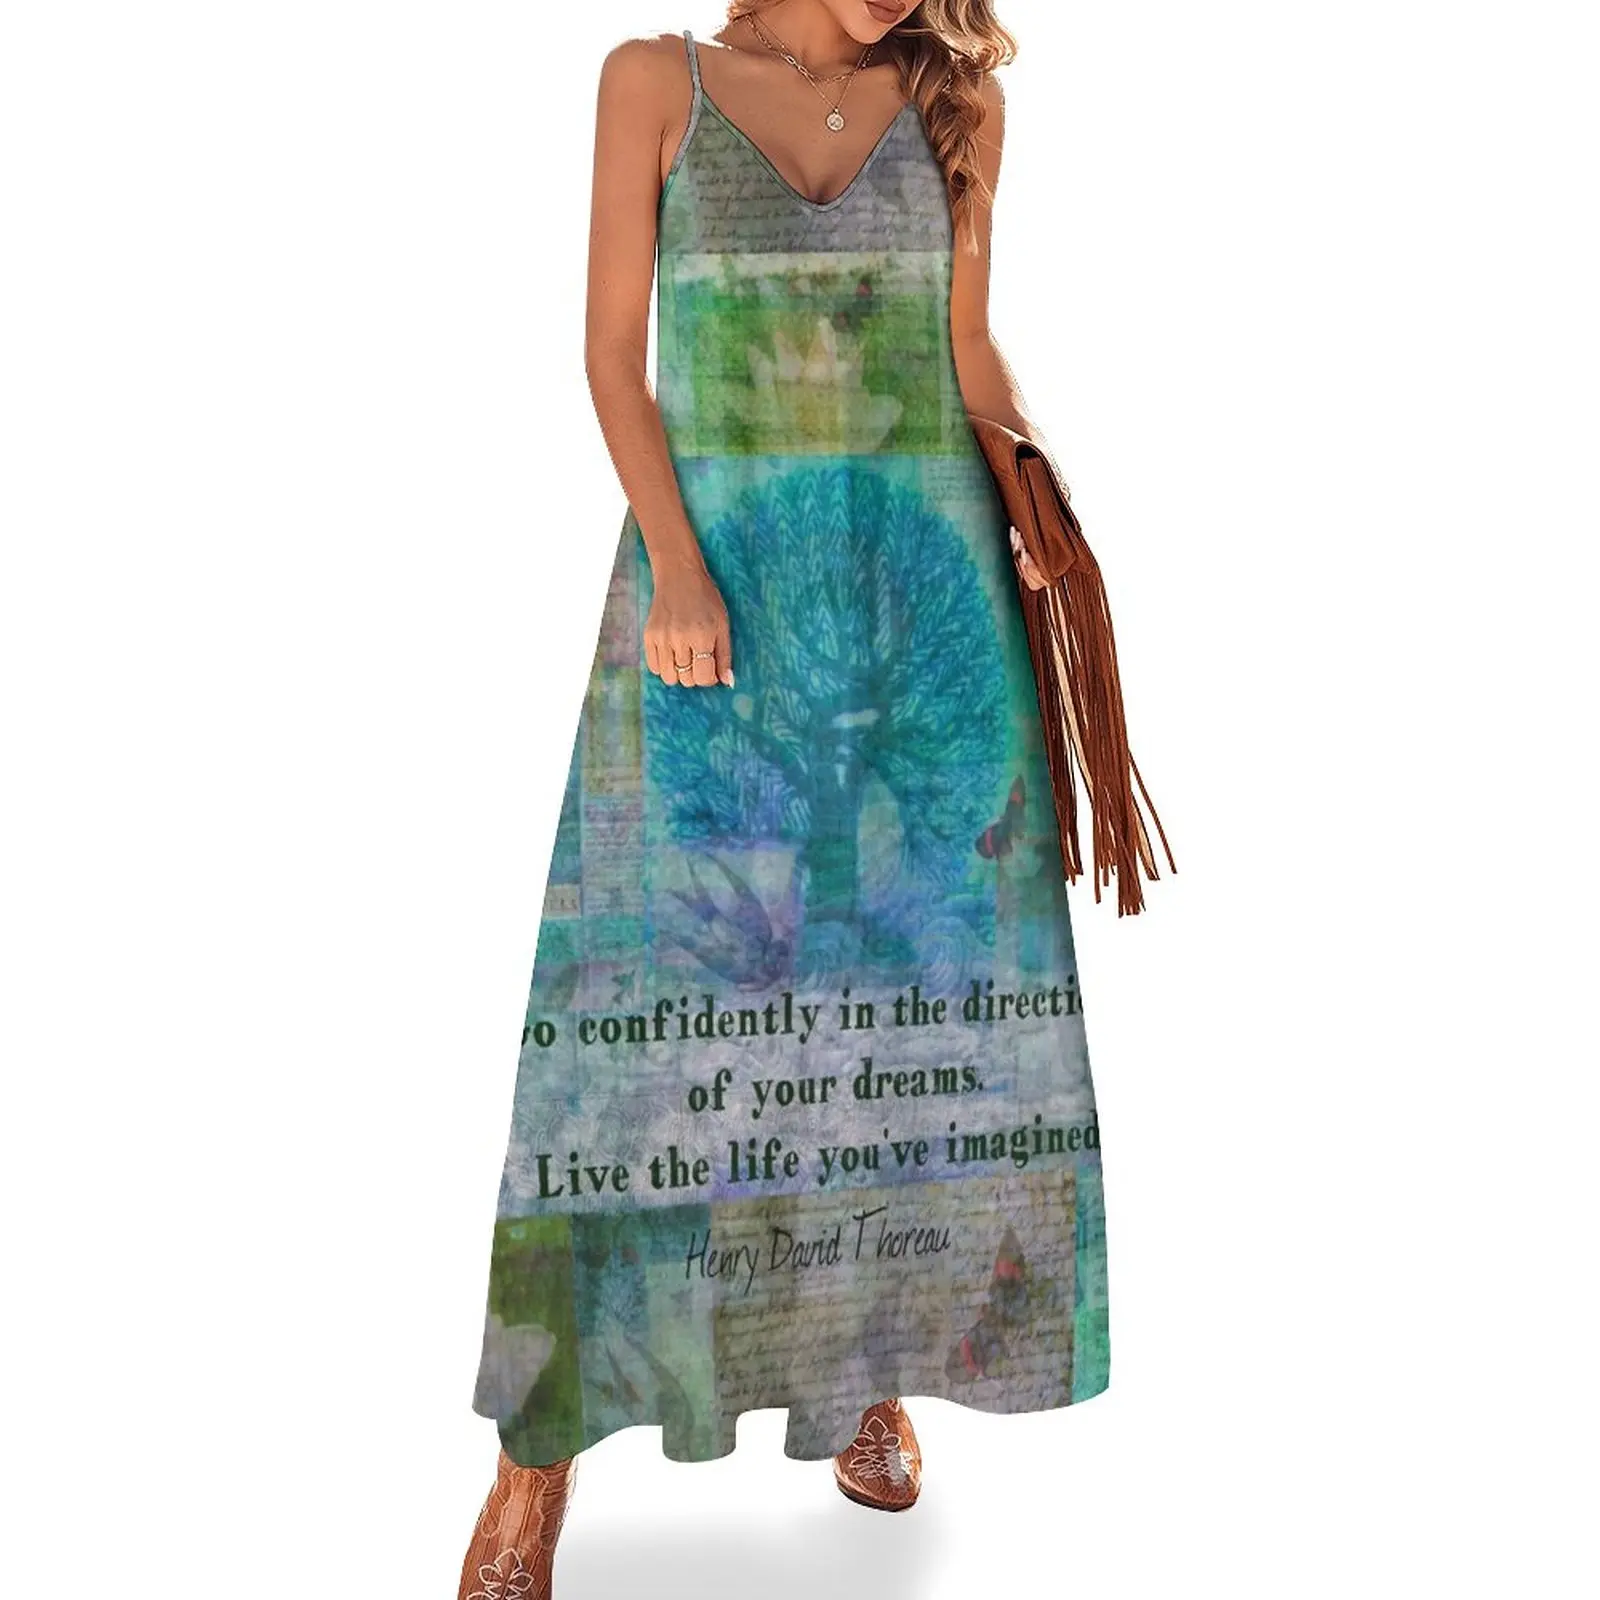 

Dream quote motivational, Henry David Thoreau Sleeveless Dress Women's summer skirt dress for women summer